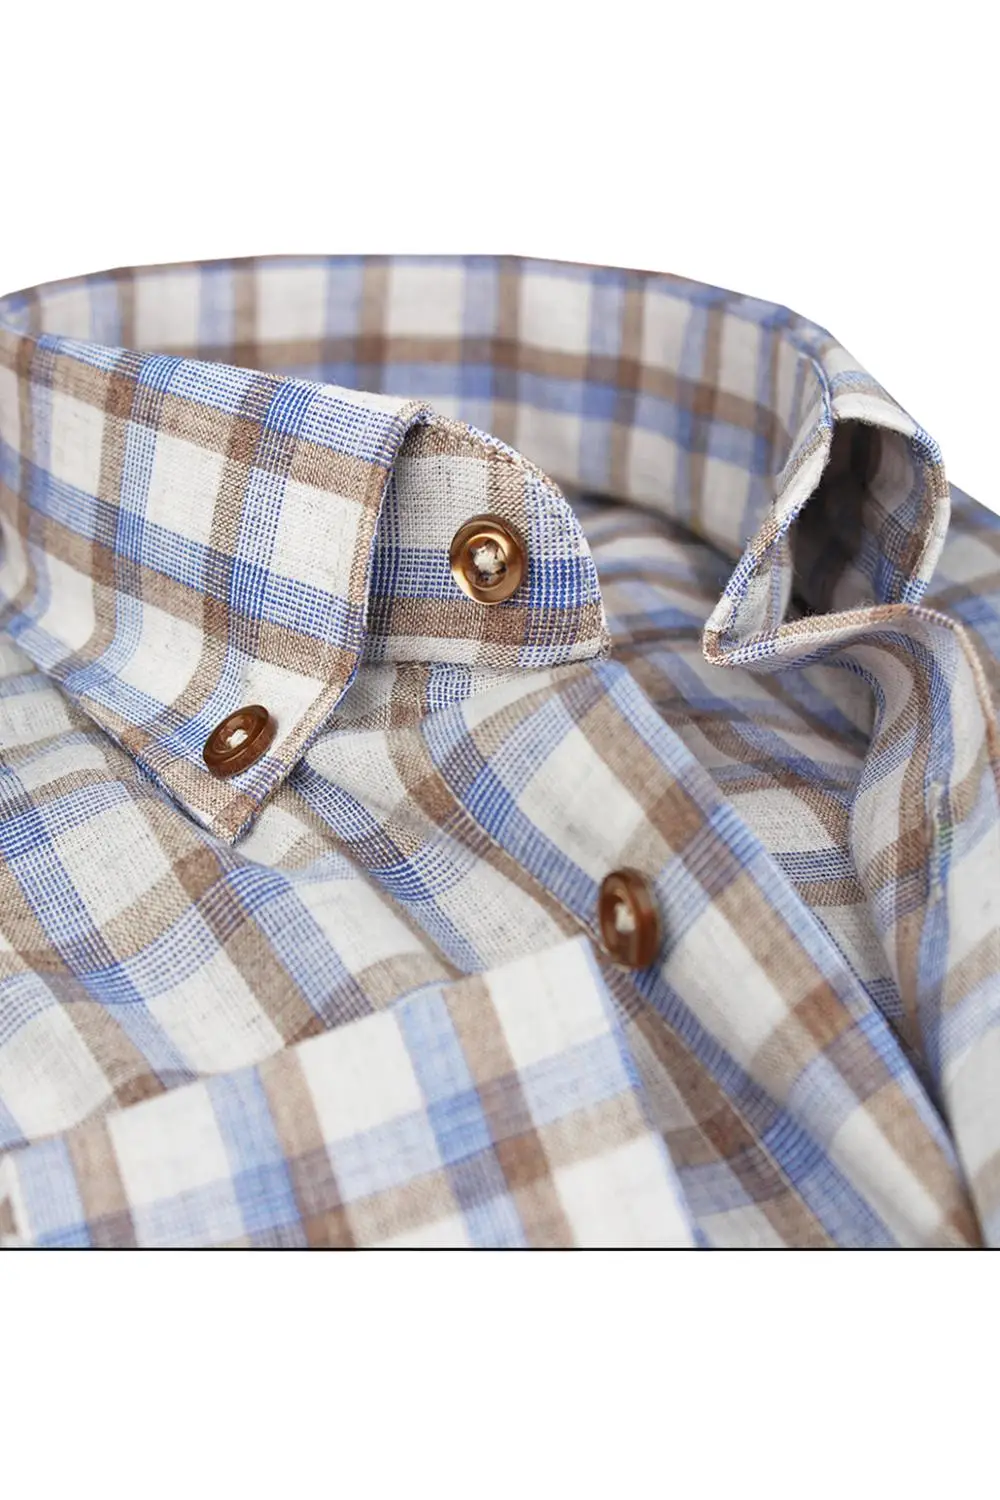 Varetta Mens Shirt Long Sleeve Full Cotton Plaid Shirt Men Casual Regular Fit Shirt With One Pocket Made in Turkey